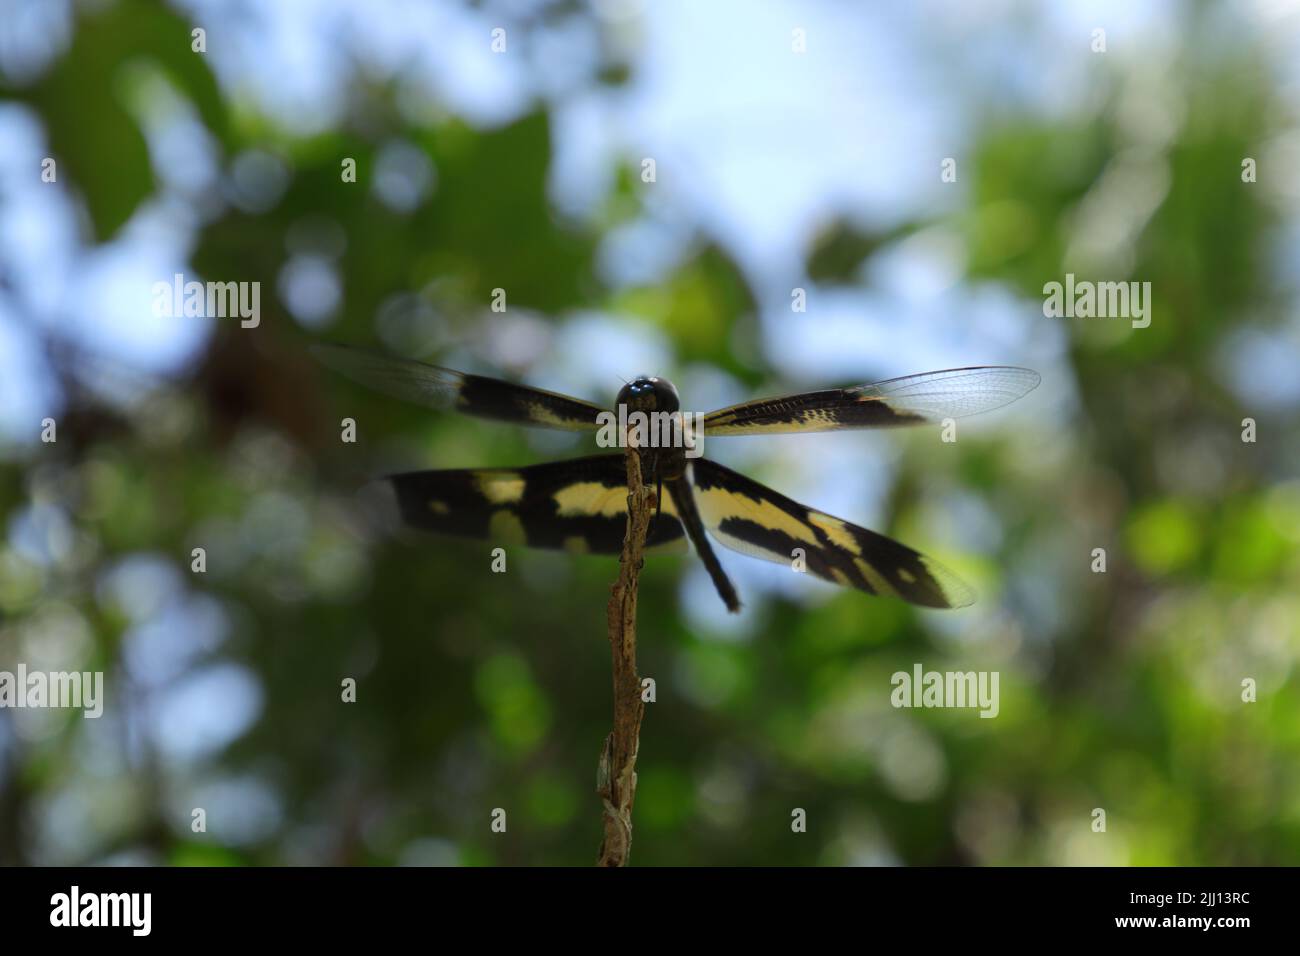 Vista de bajo nivel de un ala de dibujo común (Rhyothemis variegata) libélula encaramada en la punta de un tallo muerto.Las alas de la libélula se inclinaron hacia la izquierda si Foto de stock